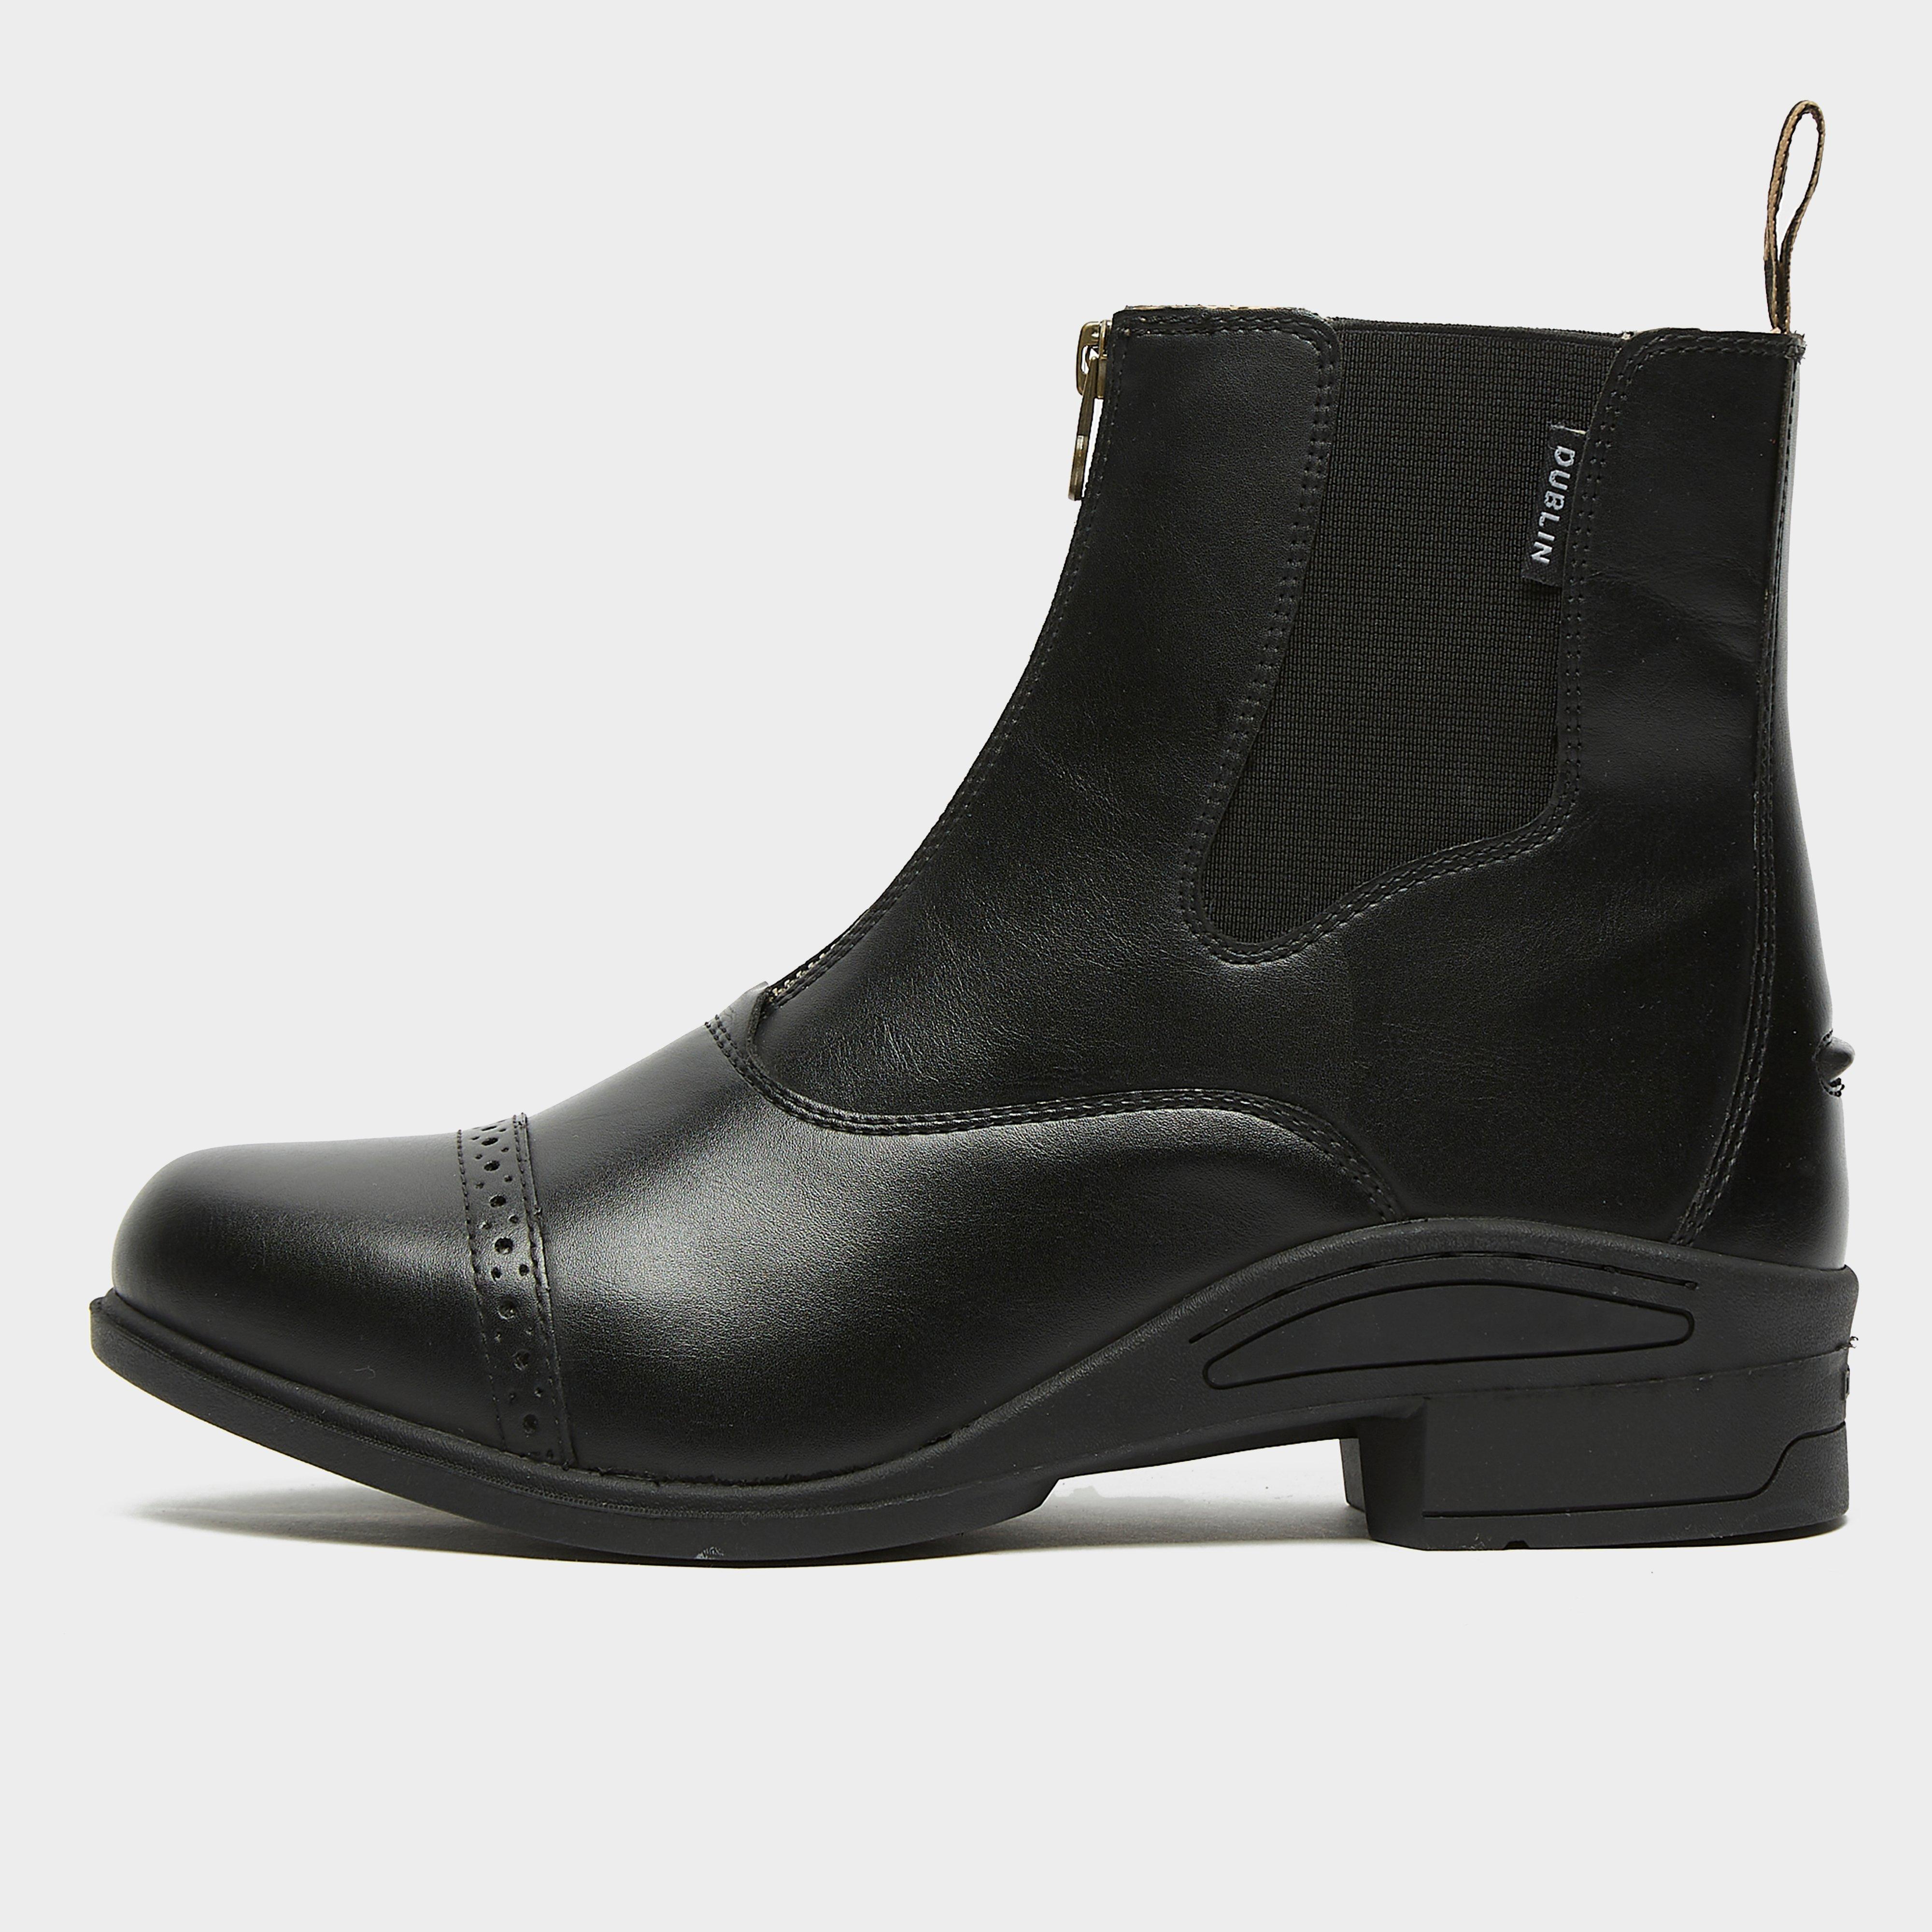  Dublin Womens Altitude Zip Paddock Boots, Black